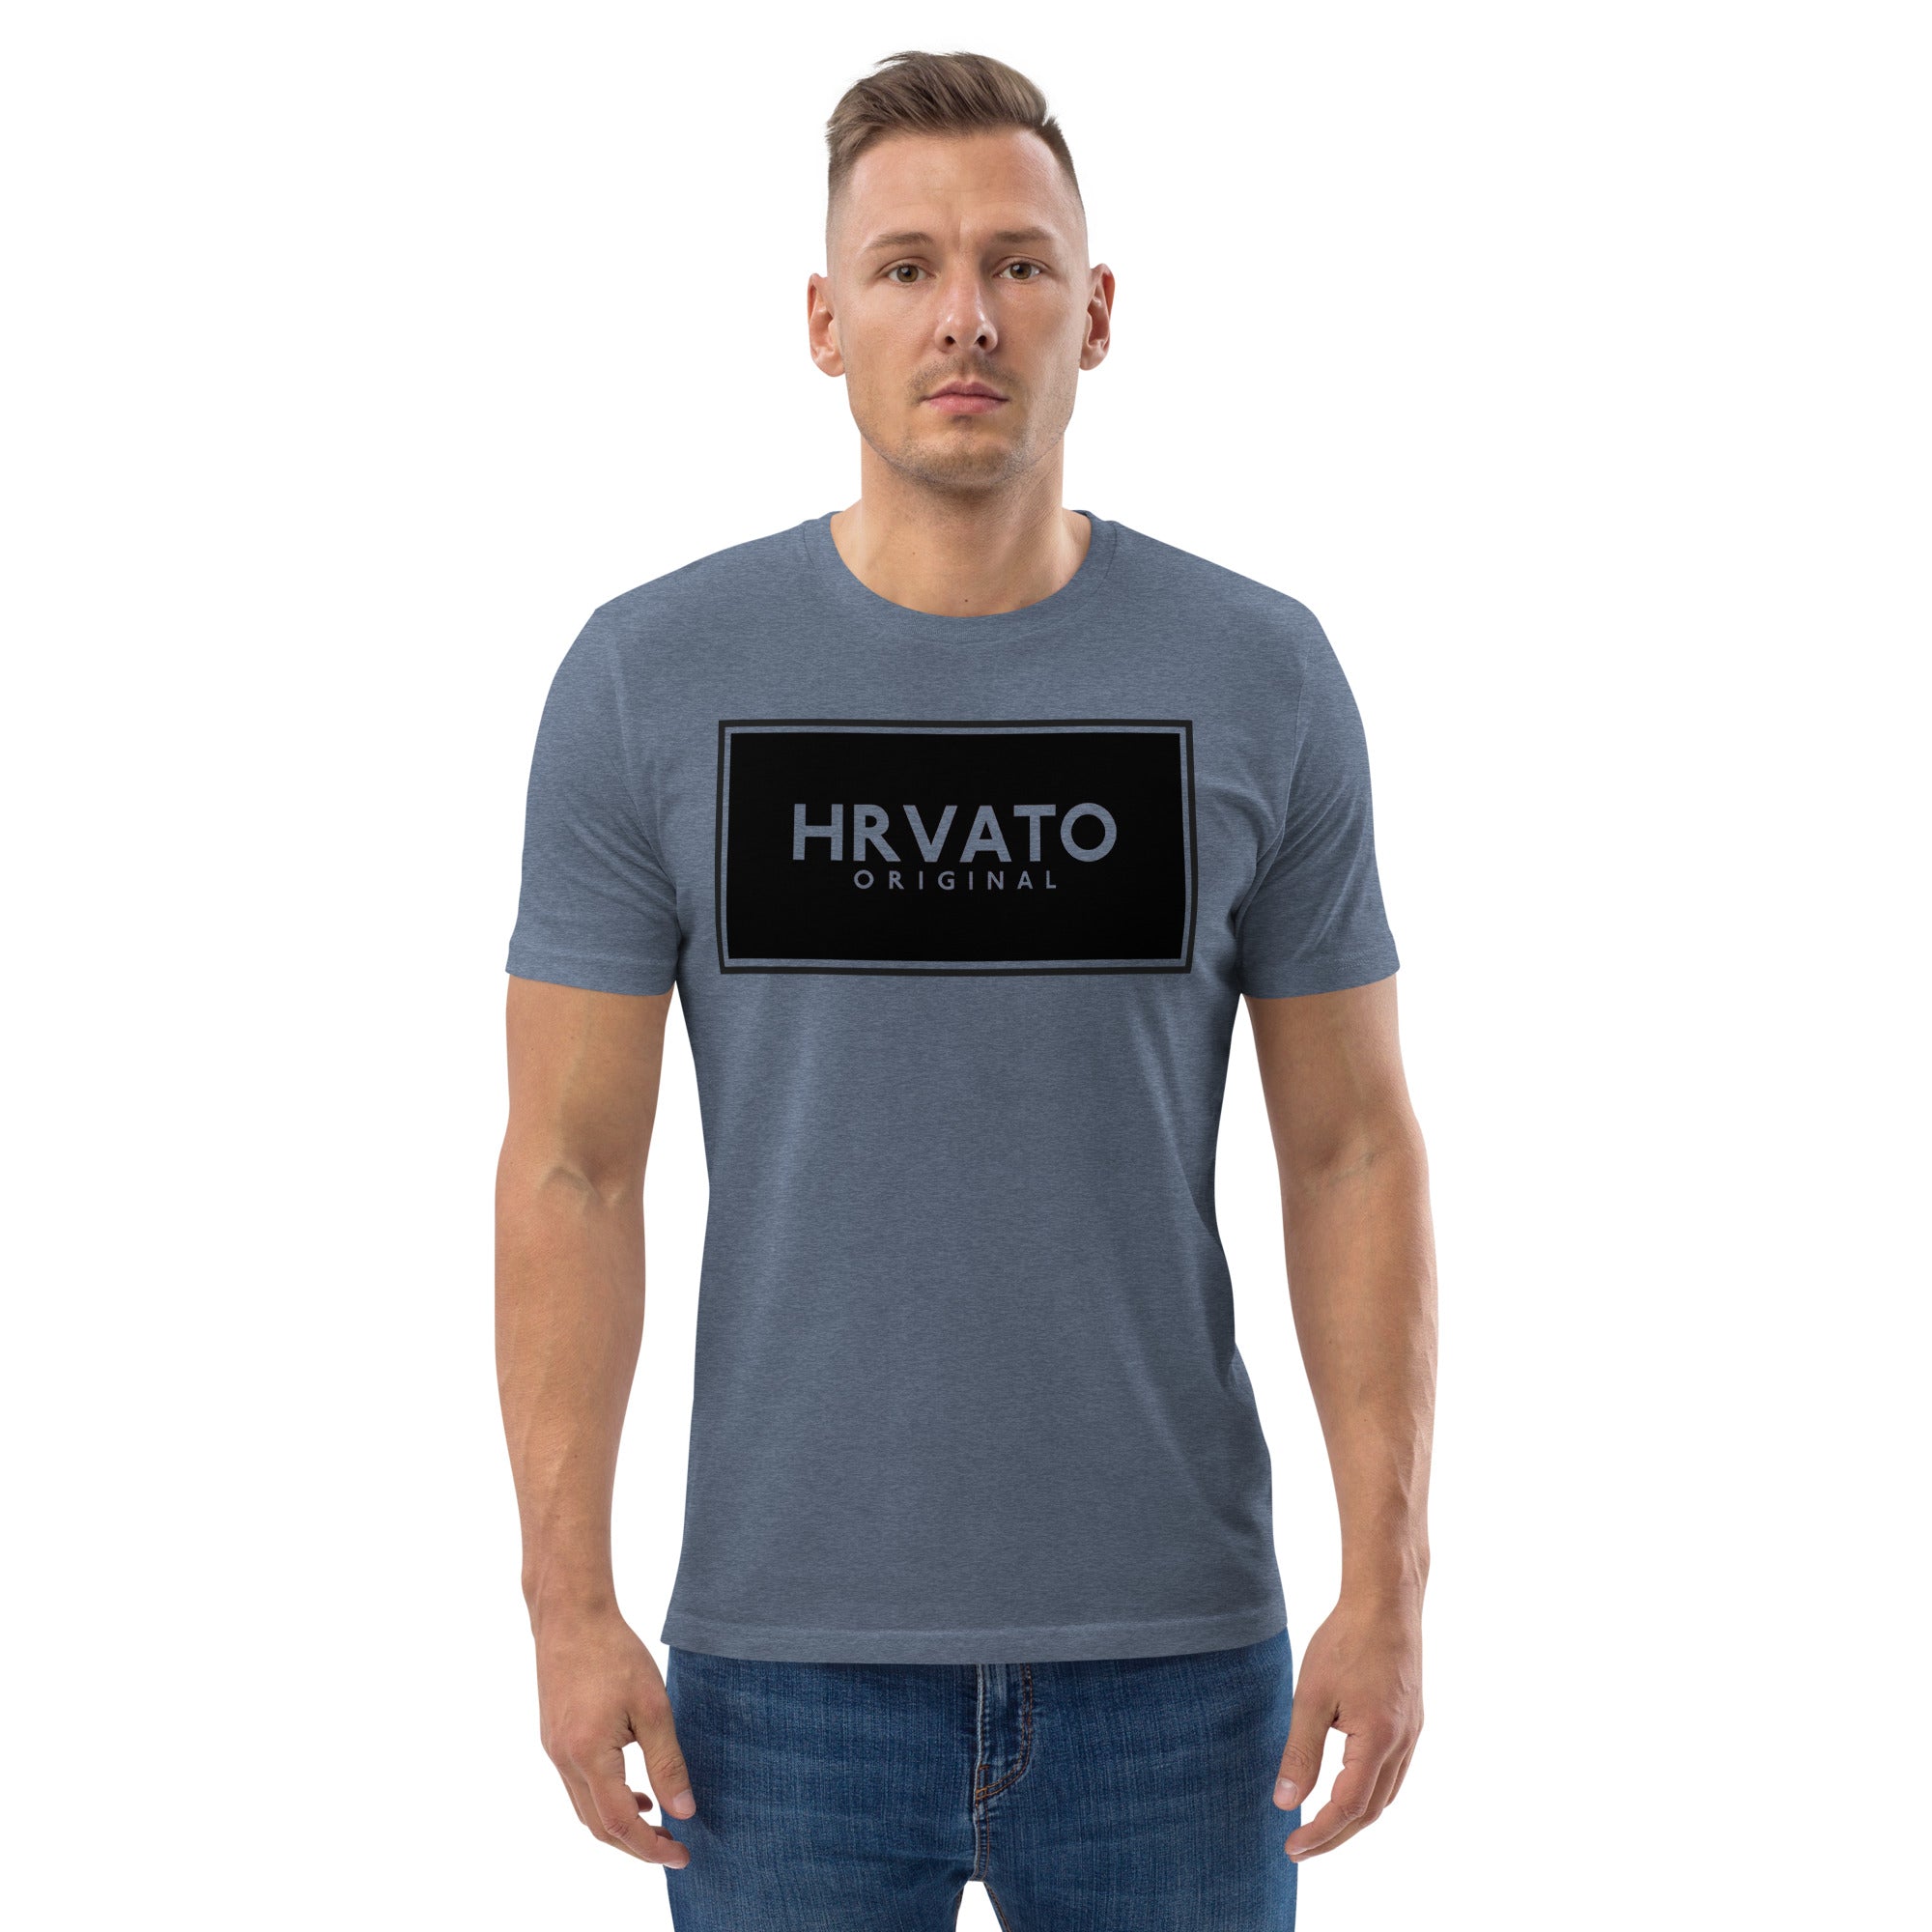 Hrvato Original Men's Casual T-Shirt - Authentic Croatian Design